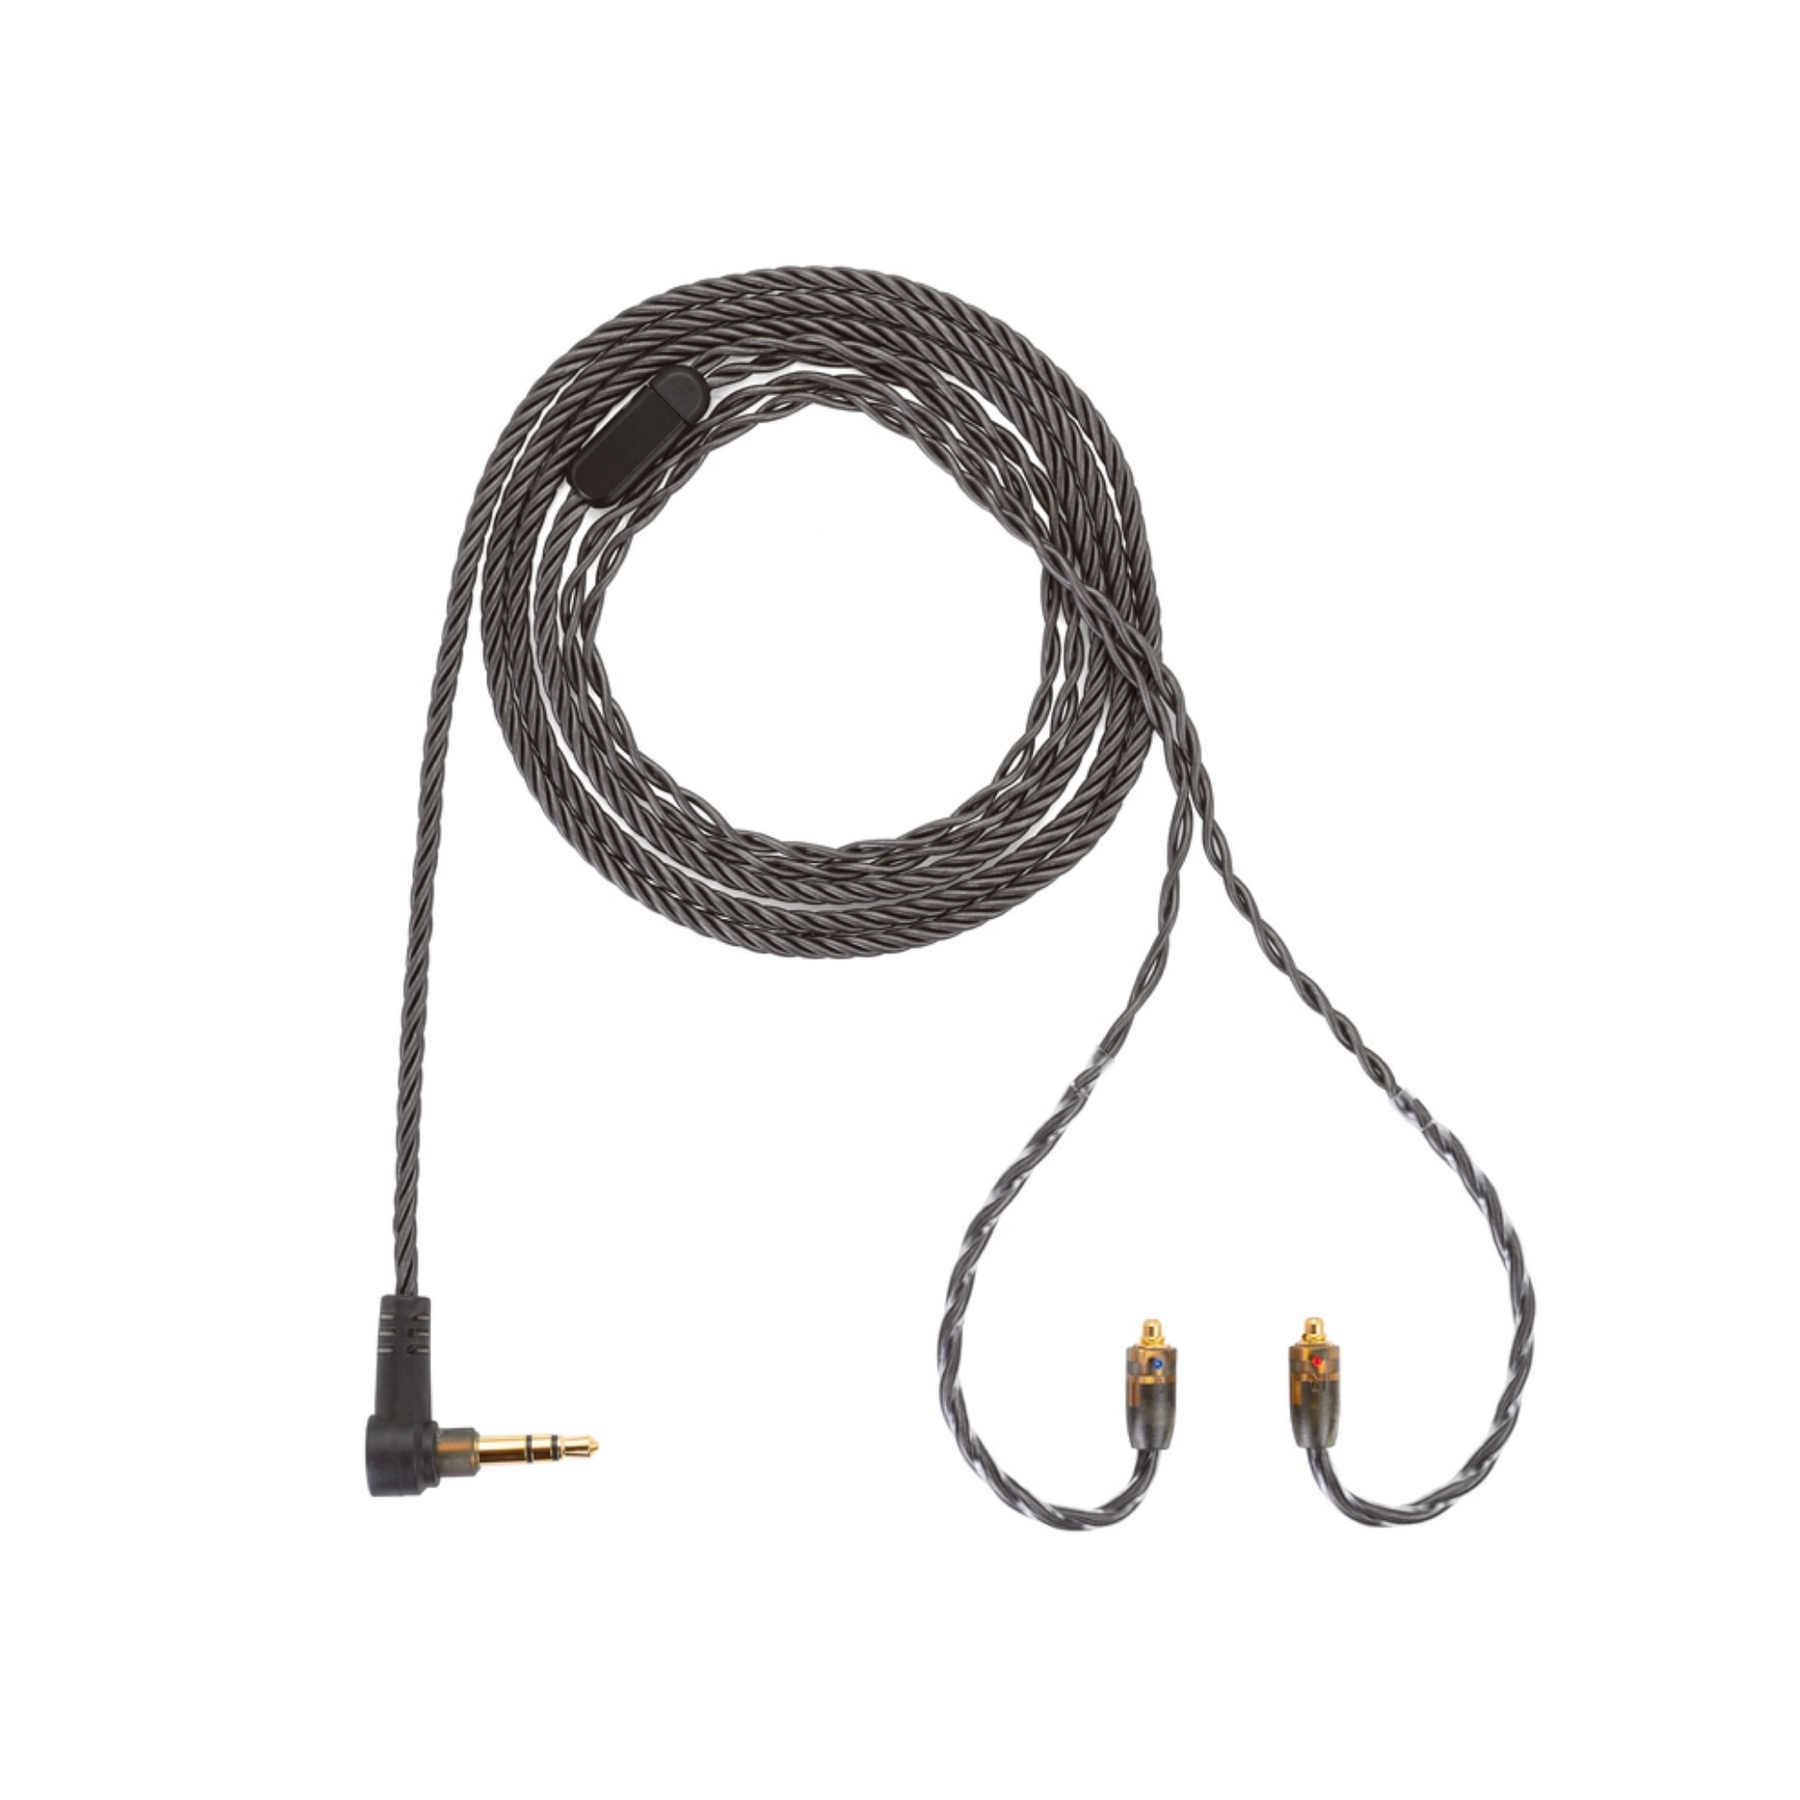 ALO audio Super Smoky Litz Cable | MMCX IEM Upgrade Cable